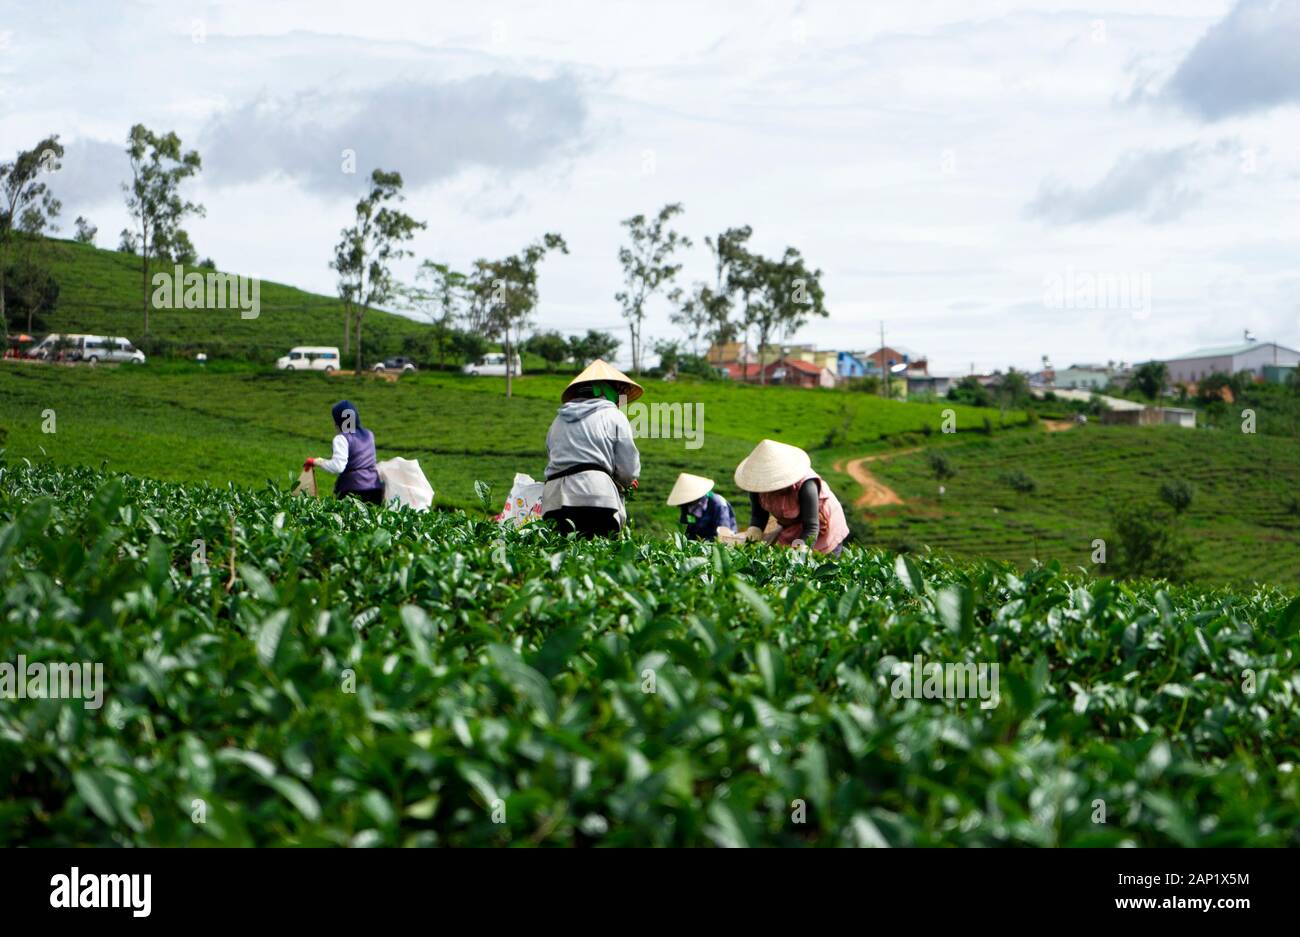 Workers in labor costume, conical hat harvesting tea at Cau Dat tea hill (Cau Dat farm) in Dalat, Vietnam Stock Photo